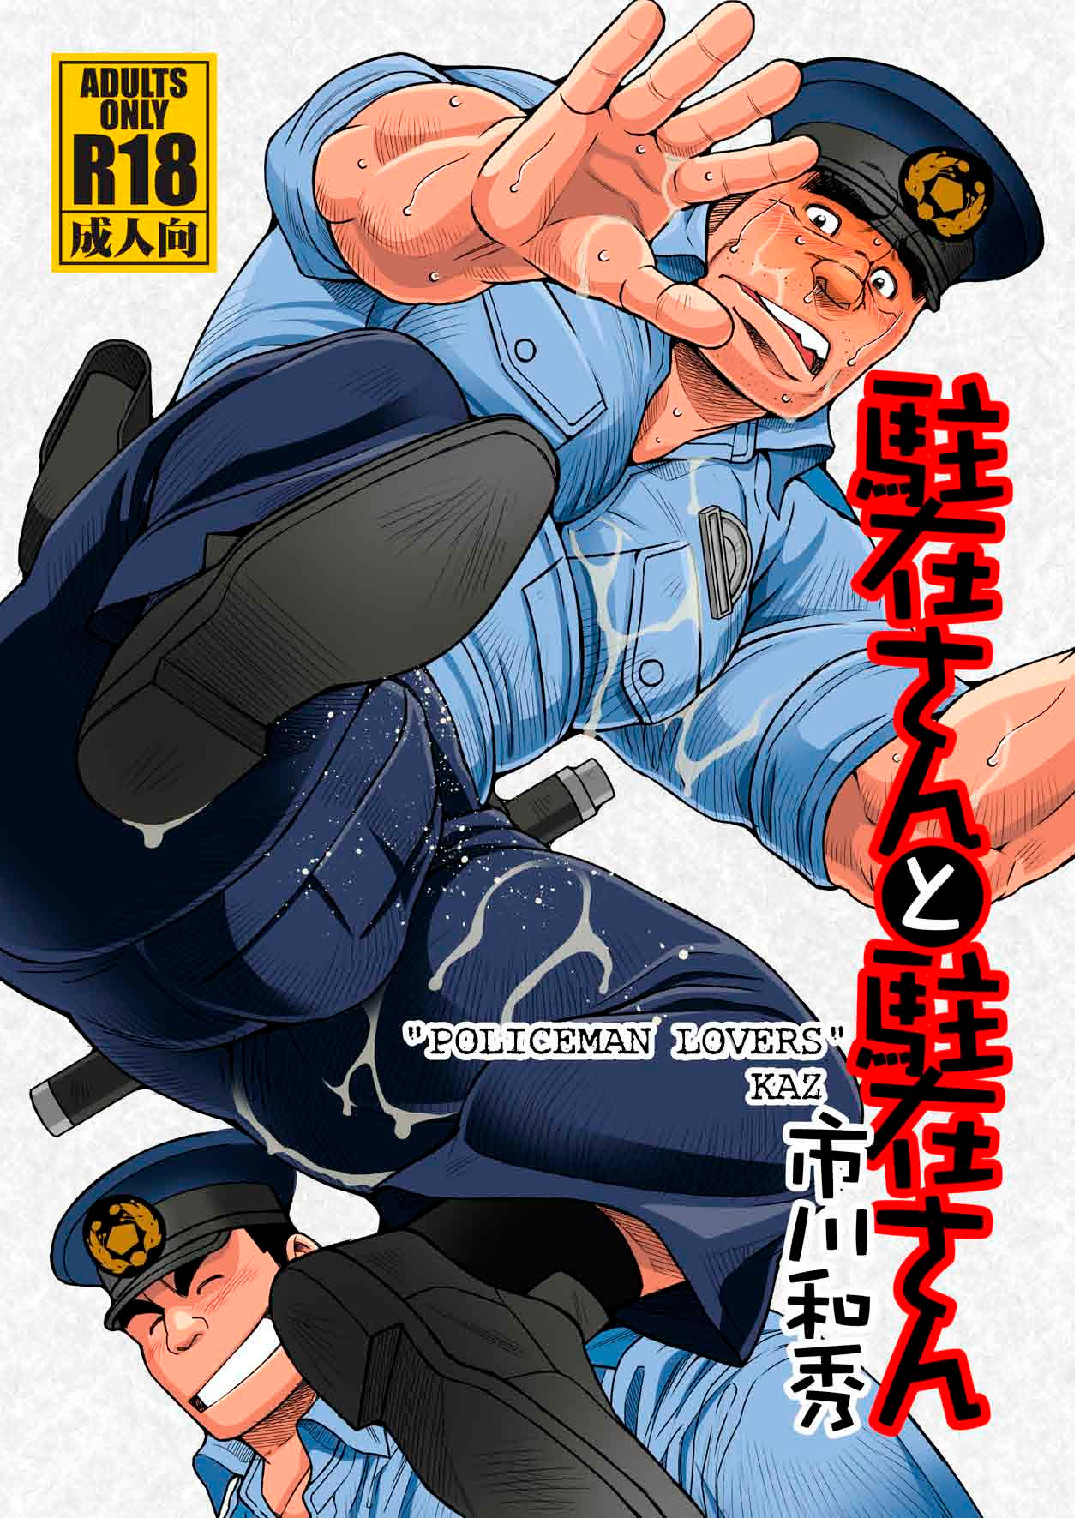 Chuuzai-san to Chuuzai-san – Policeman Lovers